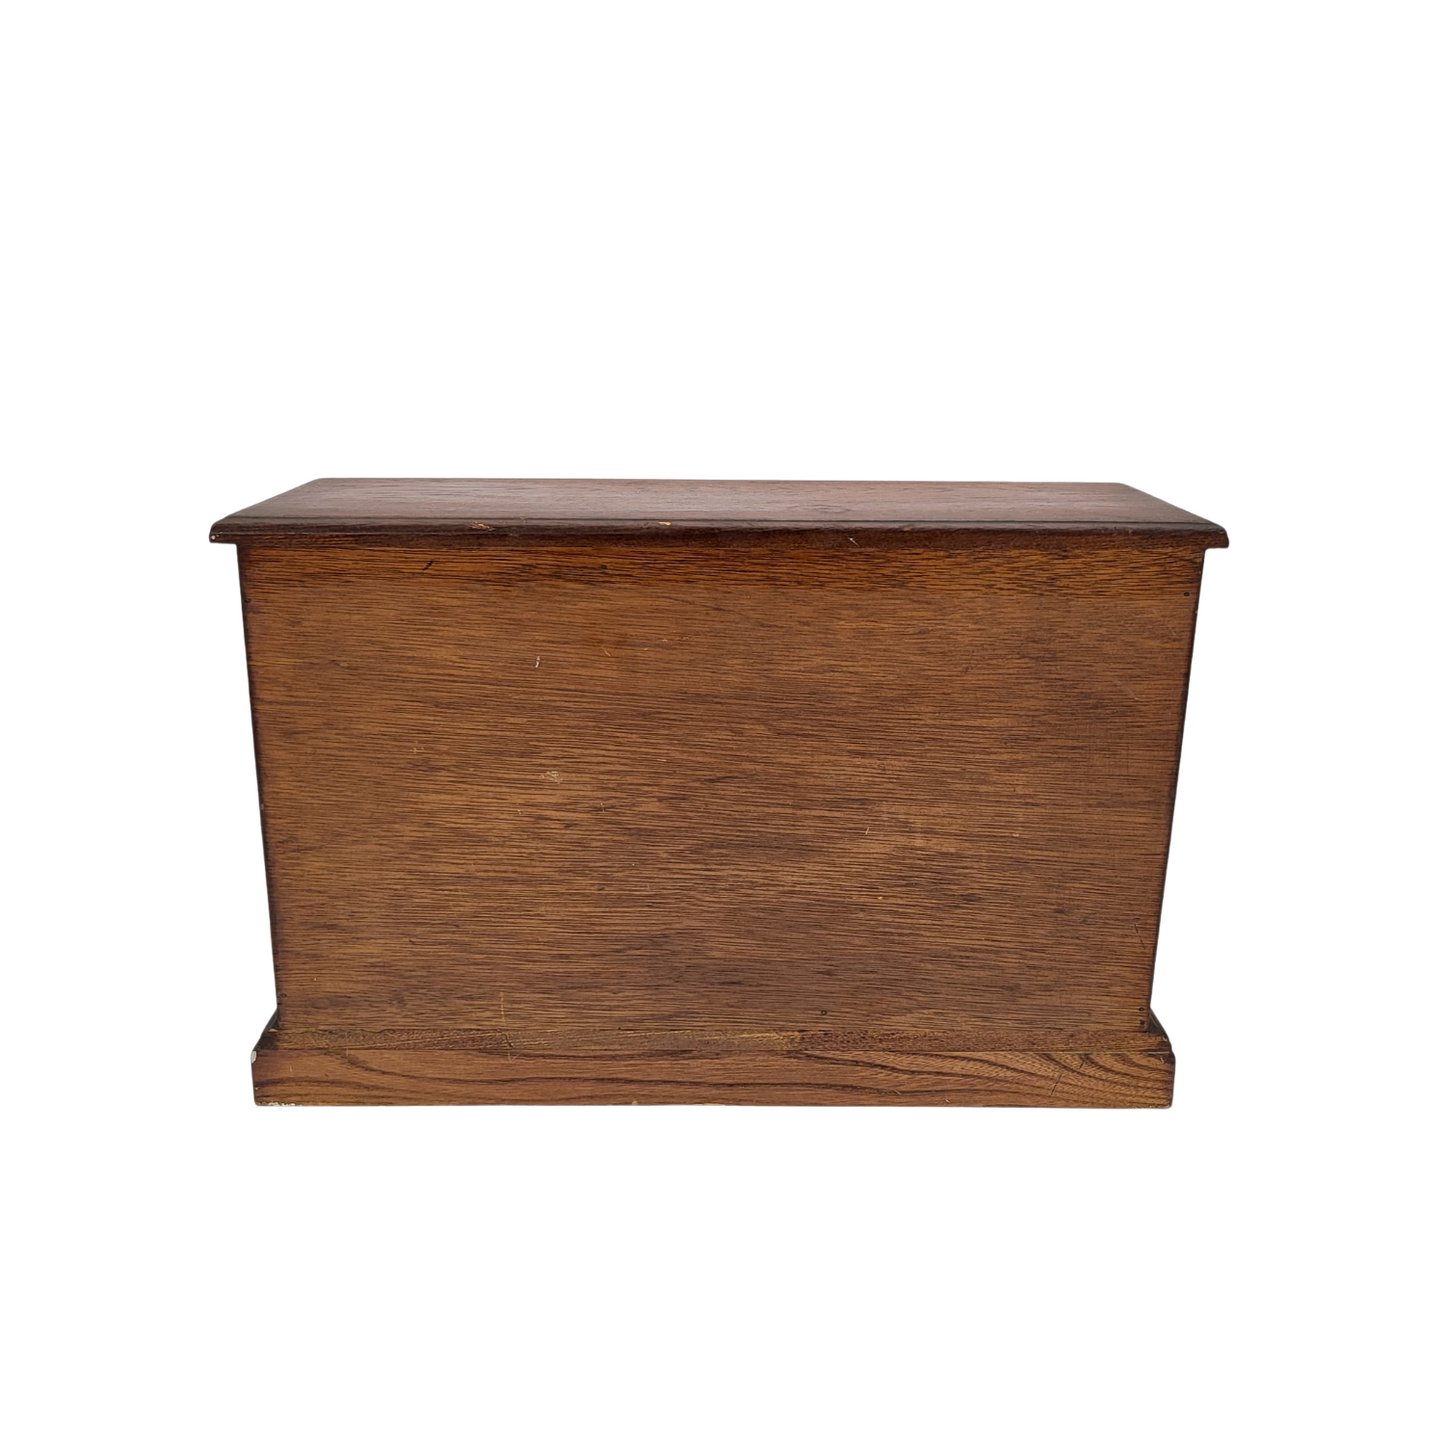 Vintage Ornate Wood Jewelry Box